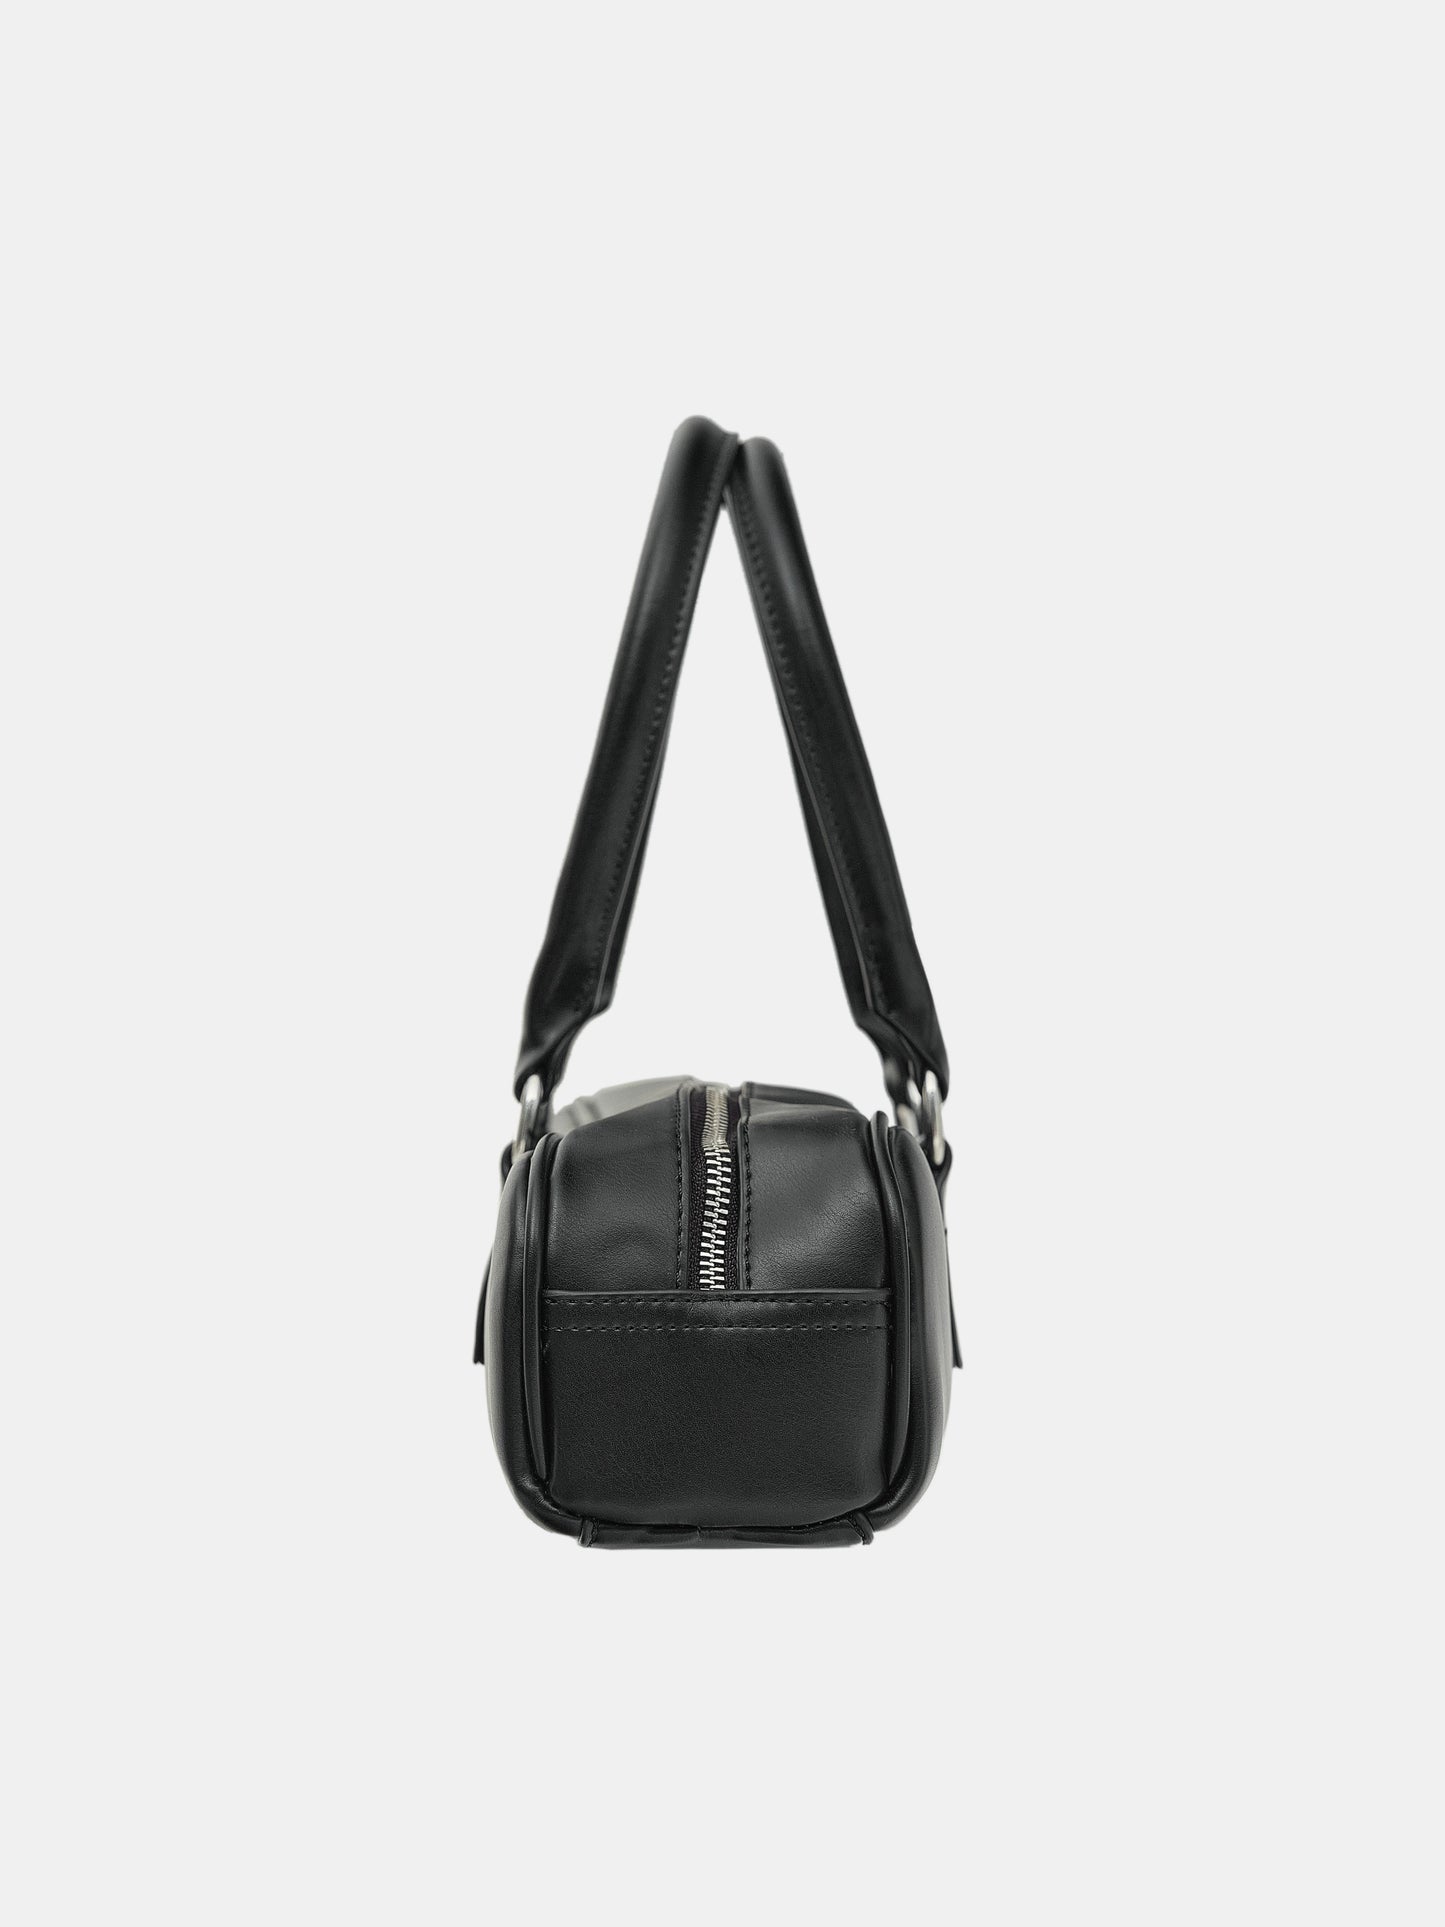 Long Rectangular Bag, Black